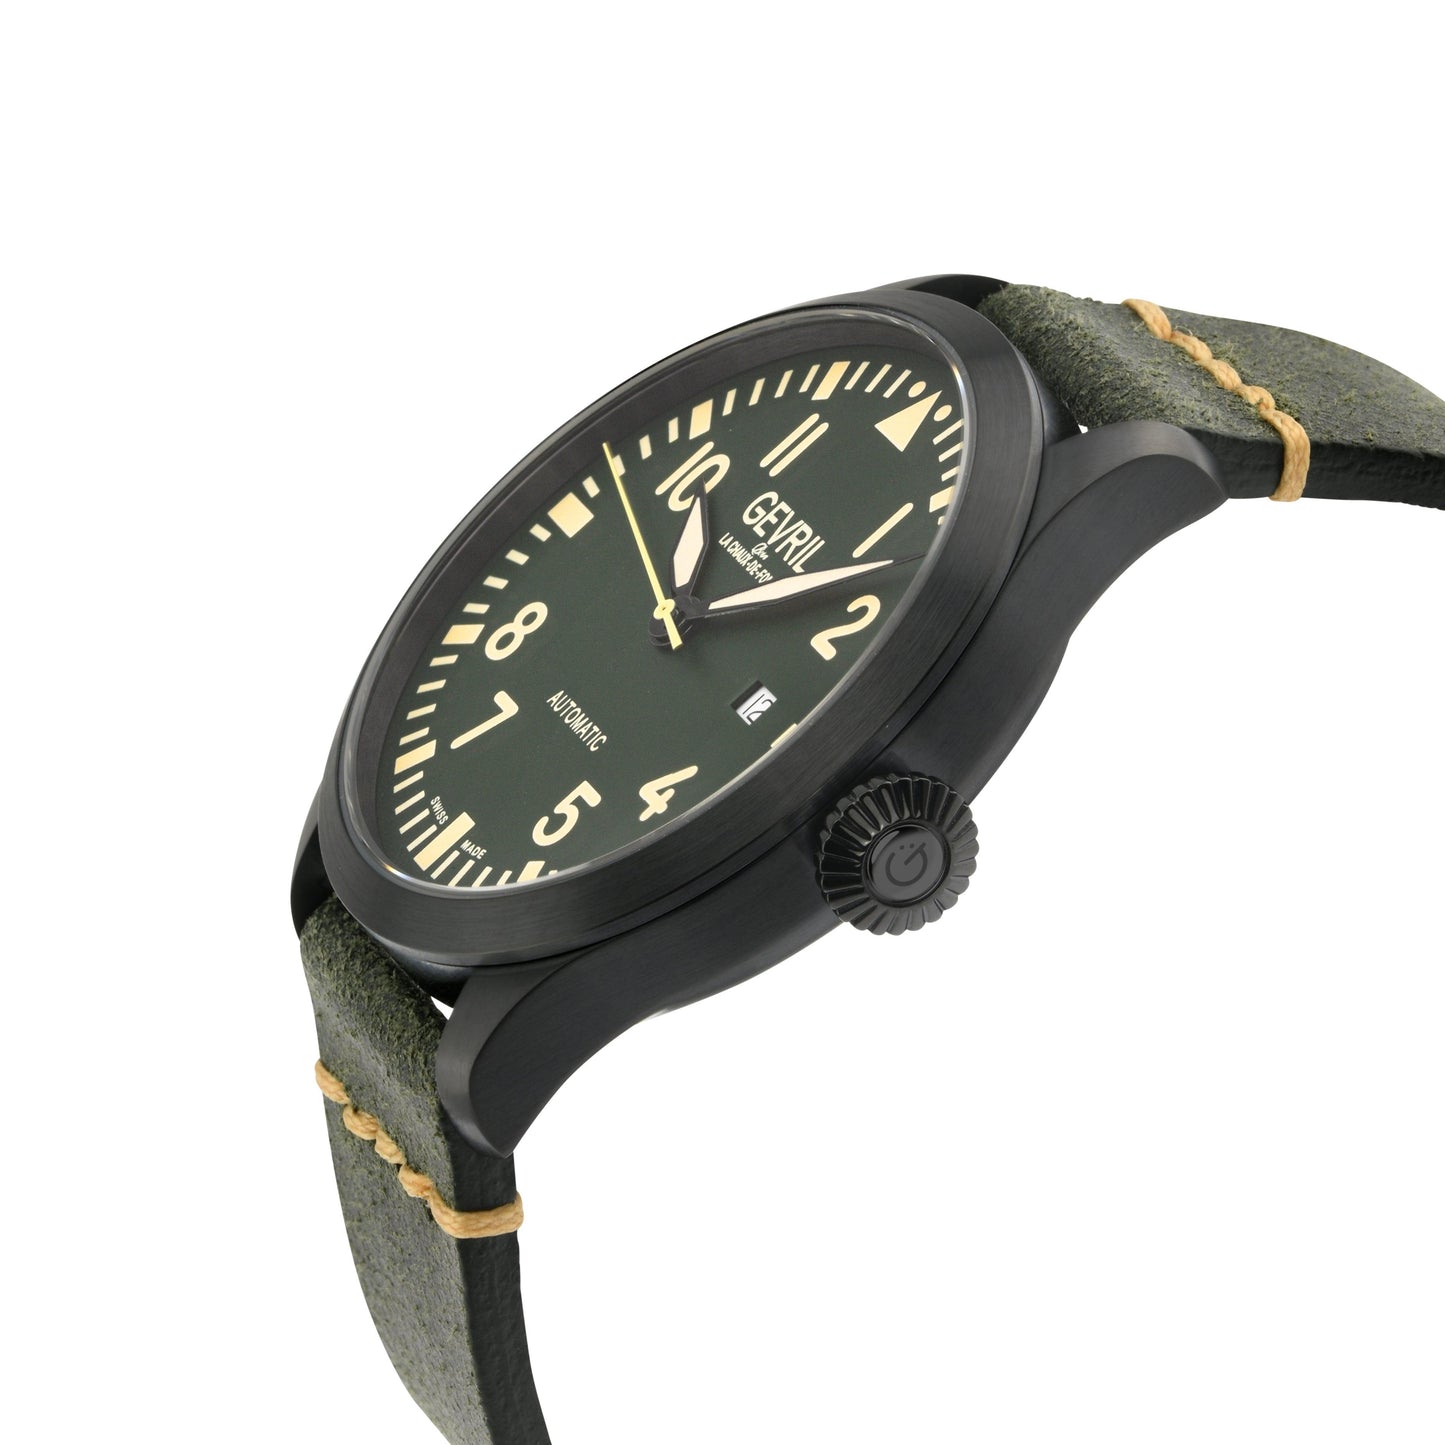 Gevril-Luxury-Swiss-Watches-Gevril Vaughn - Pilot-43506